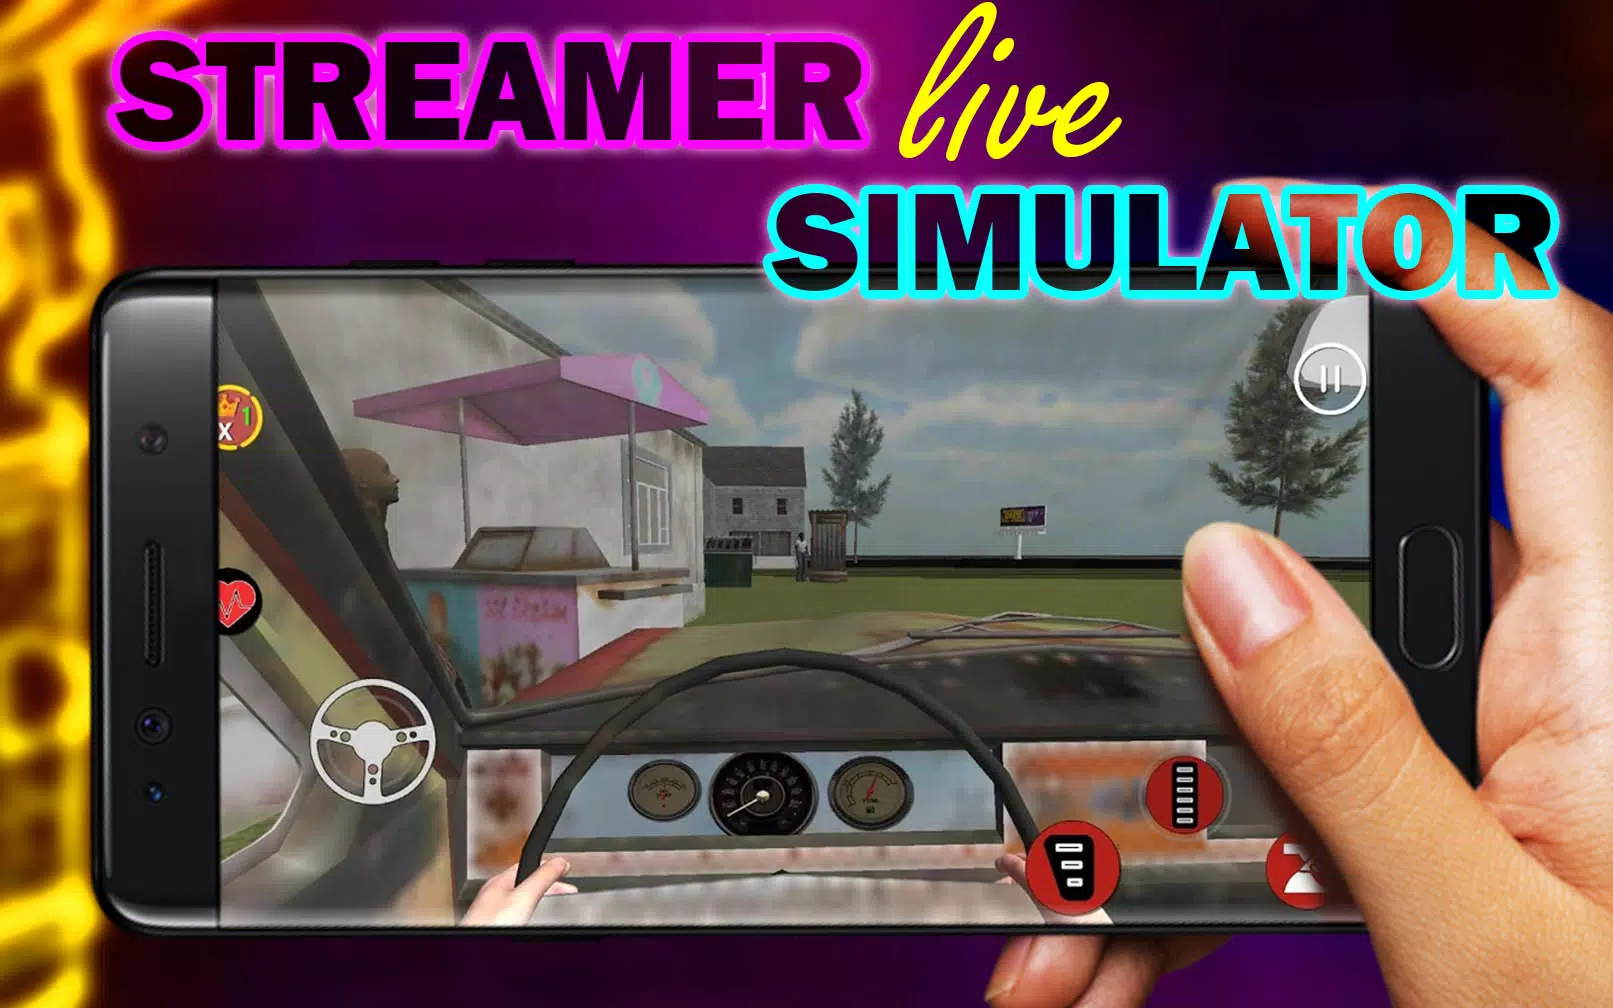 streamer life simulator walkthrough APK + Mod for Android.